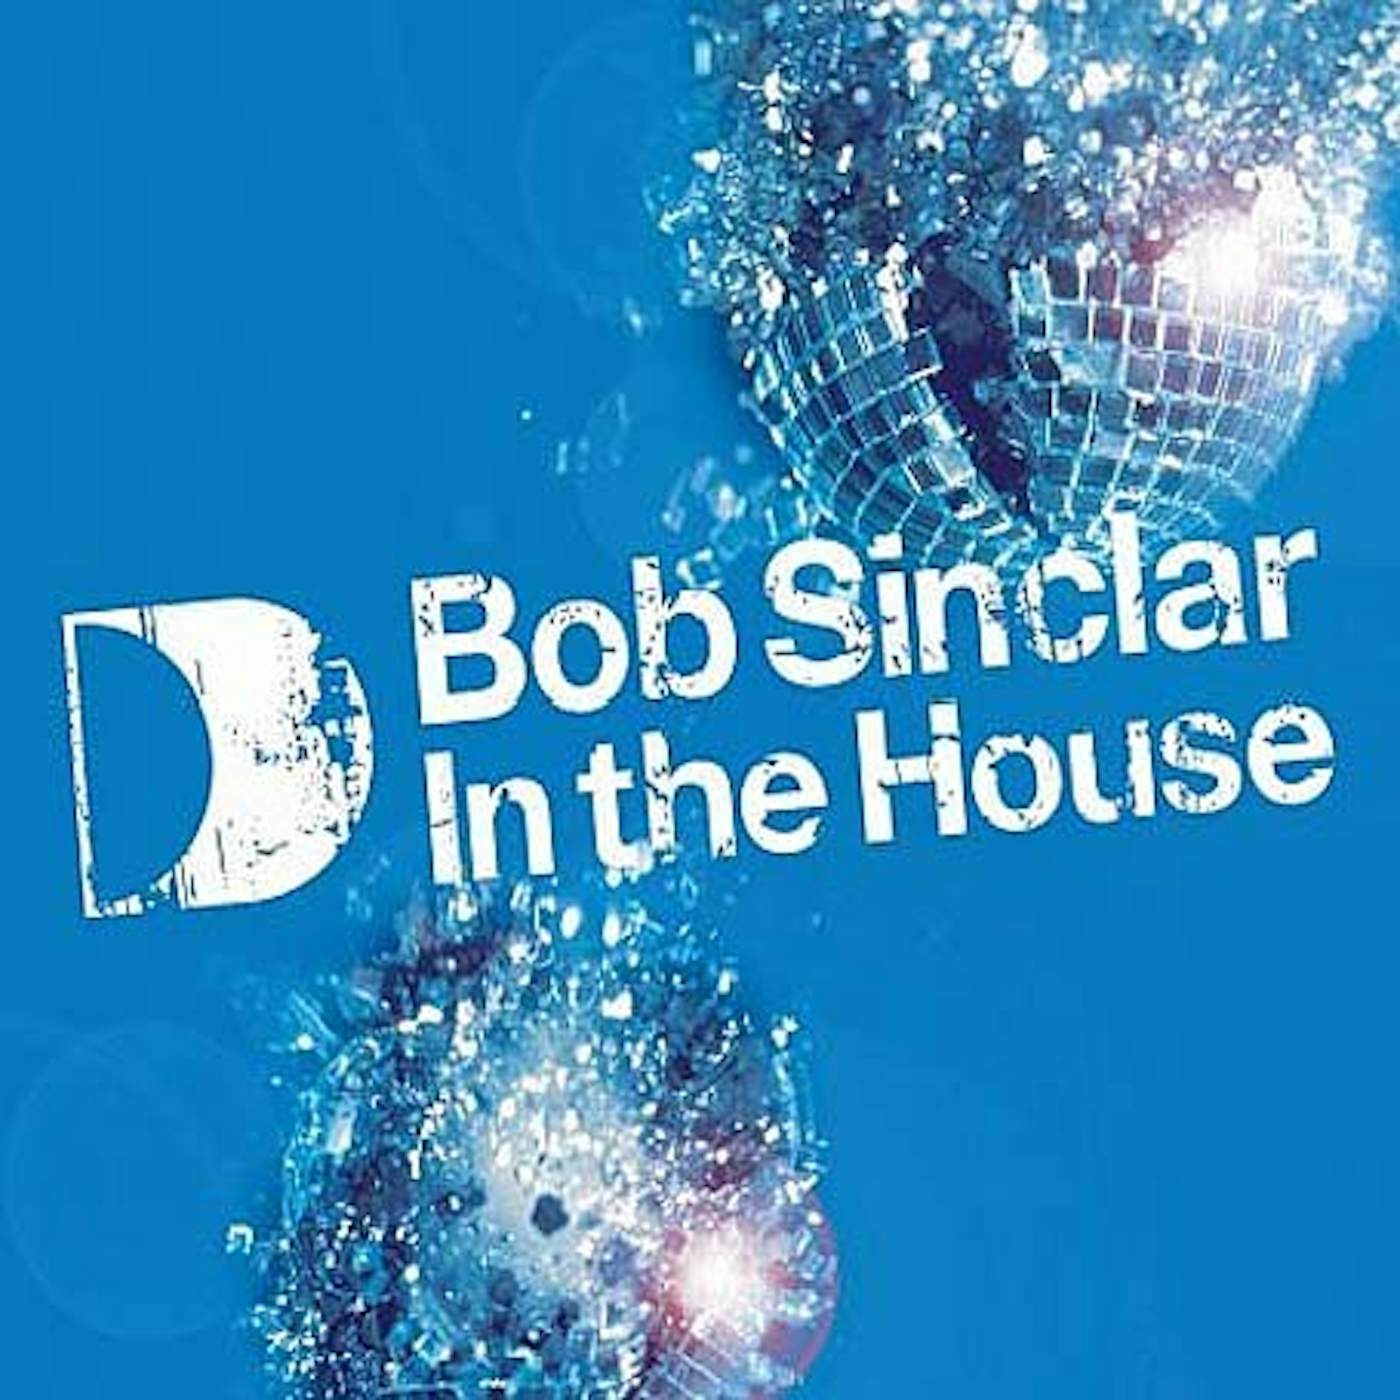 Bob Sinclar IN THE HOUSE 1 Vinyl Record